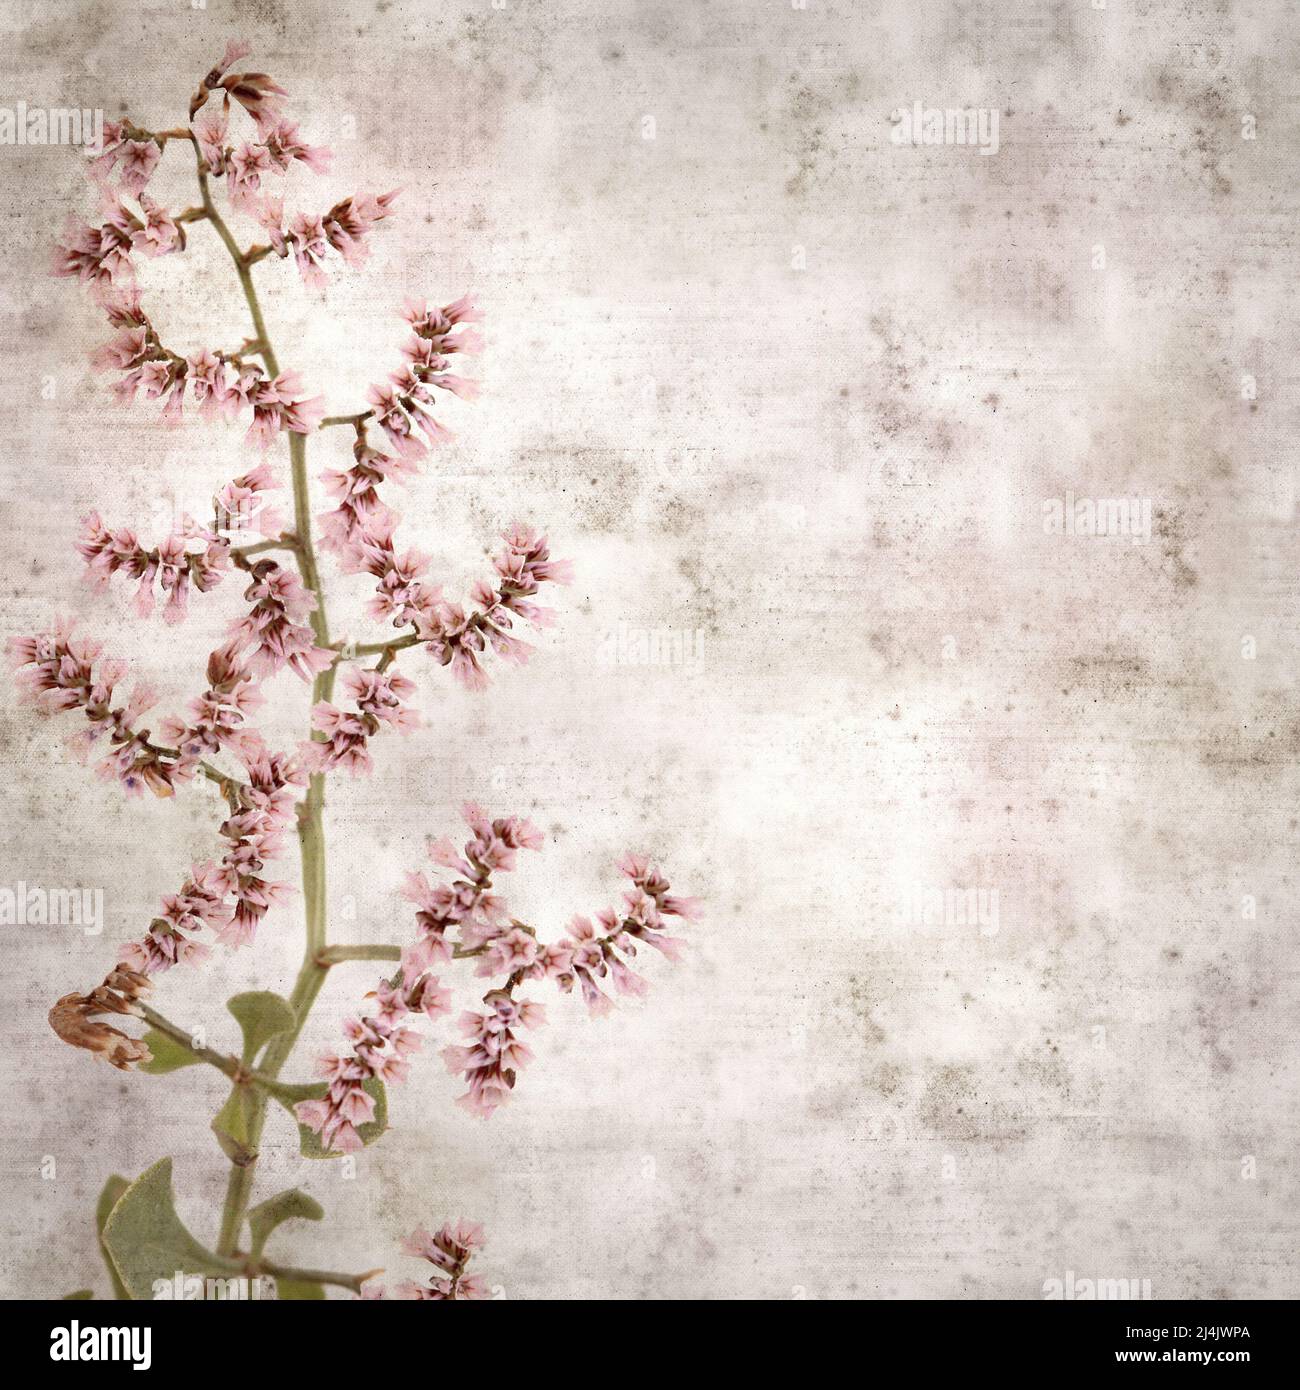 square stylish old textured paper background with pale pink flowers og Limonium pectinatum sea rosemary Stock Photo